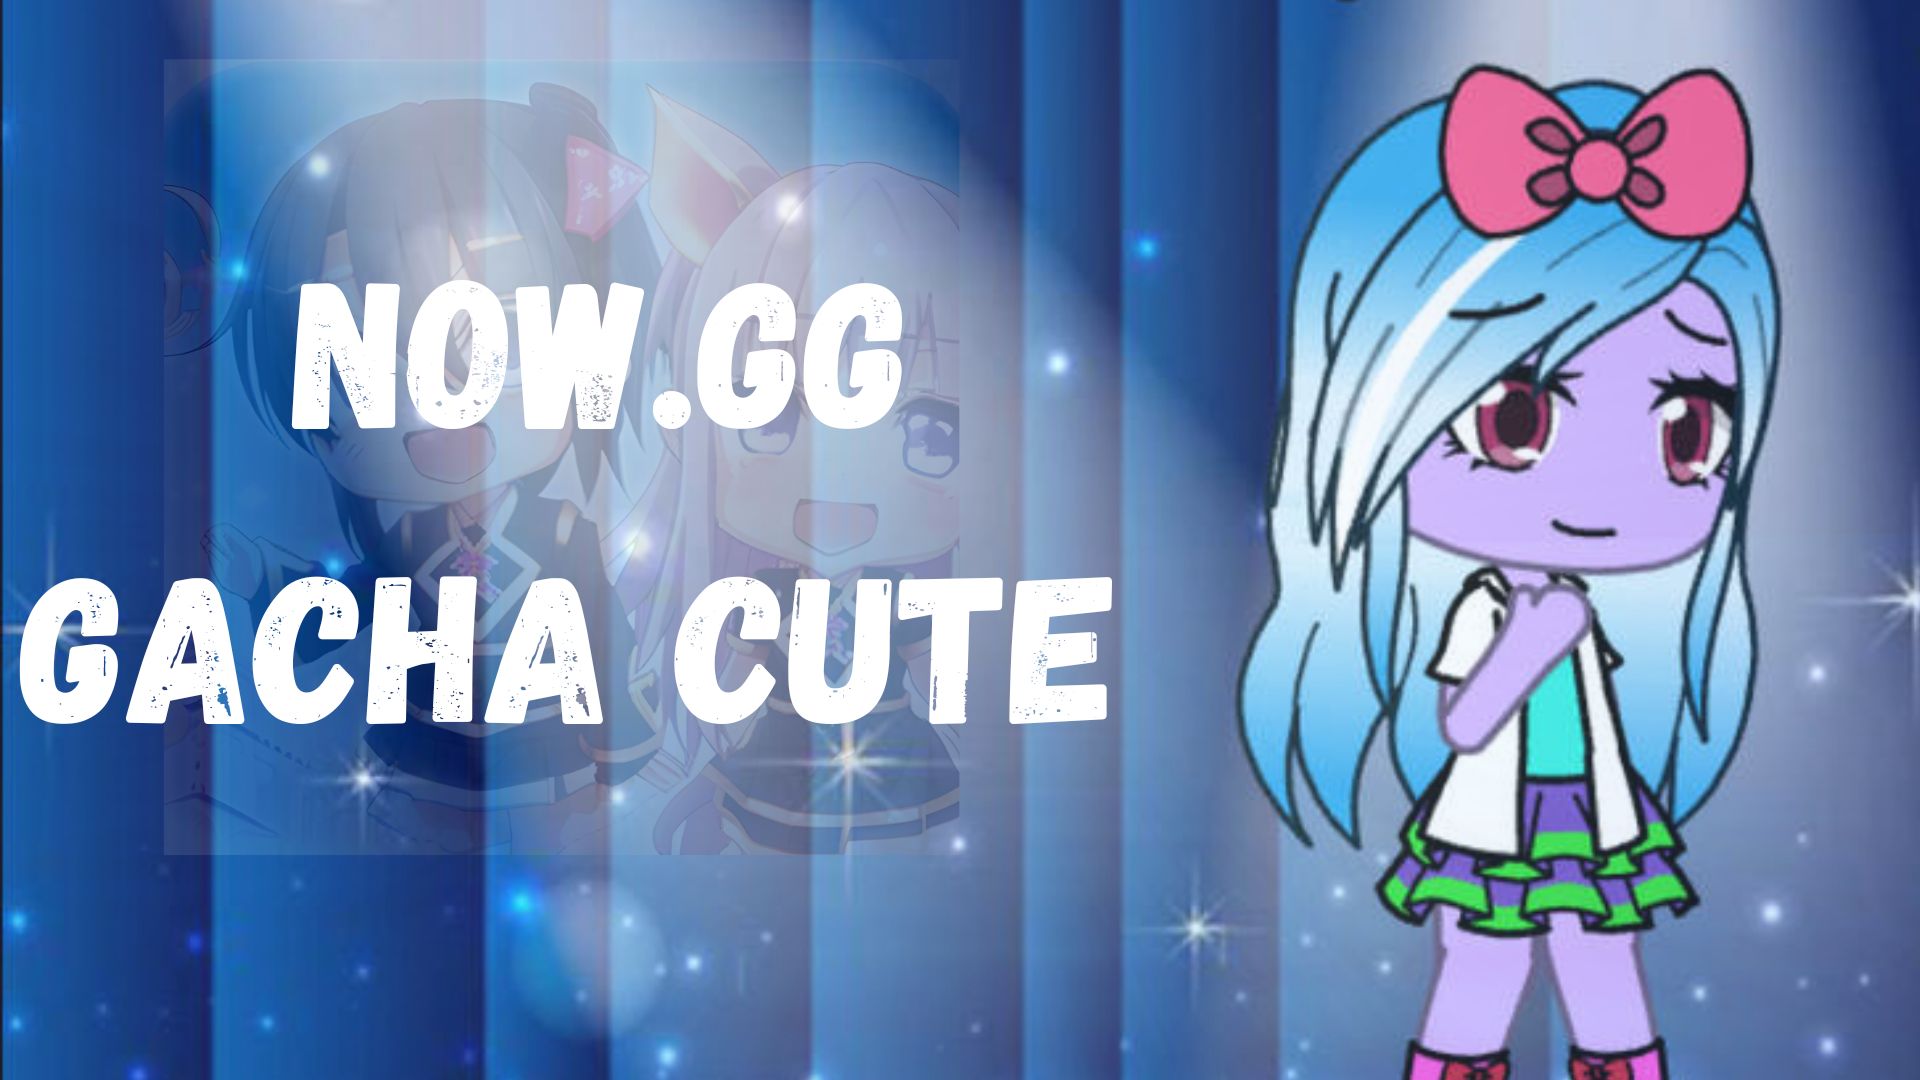 Now.gg Gacha Cute: Play Gacha Cute Online On Browser Free